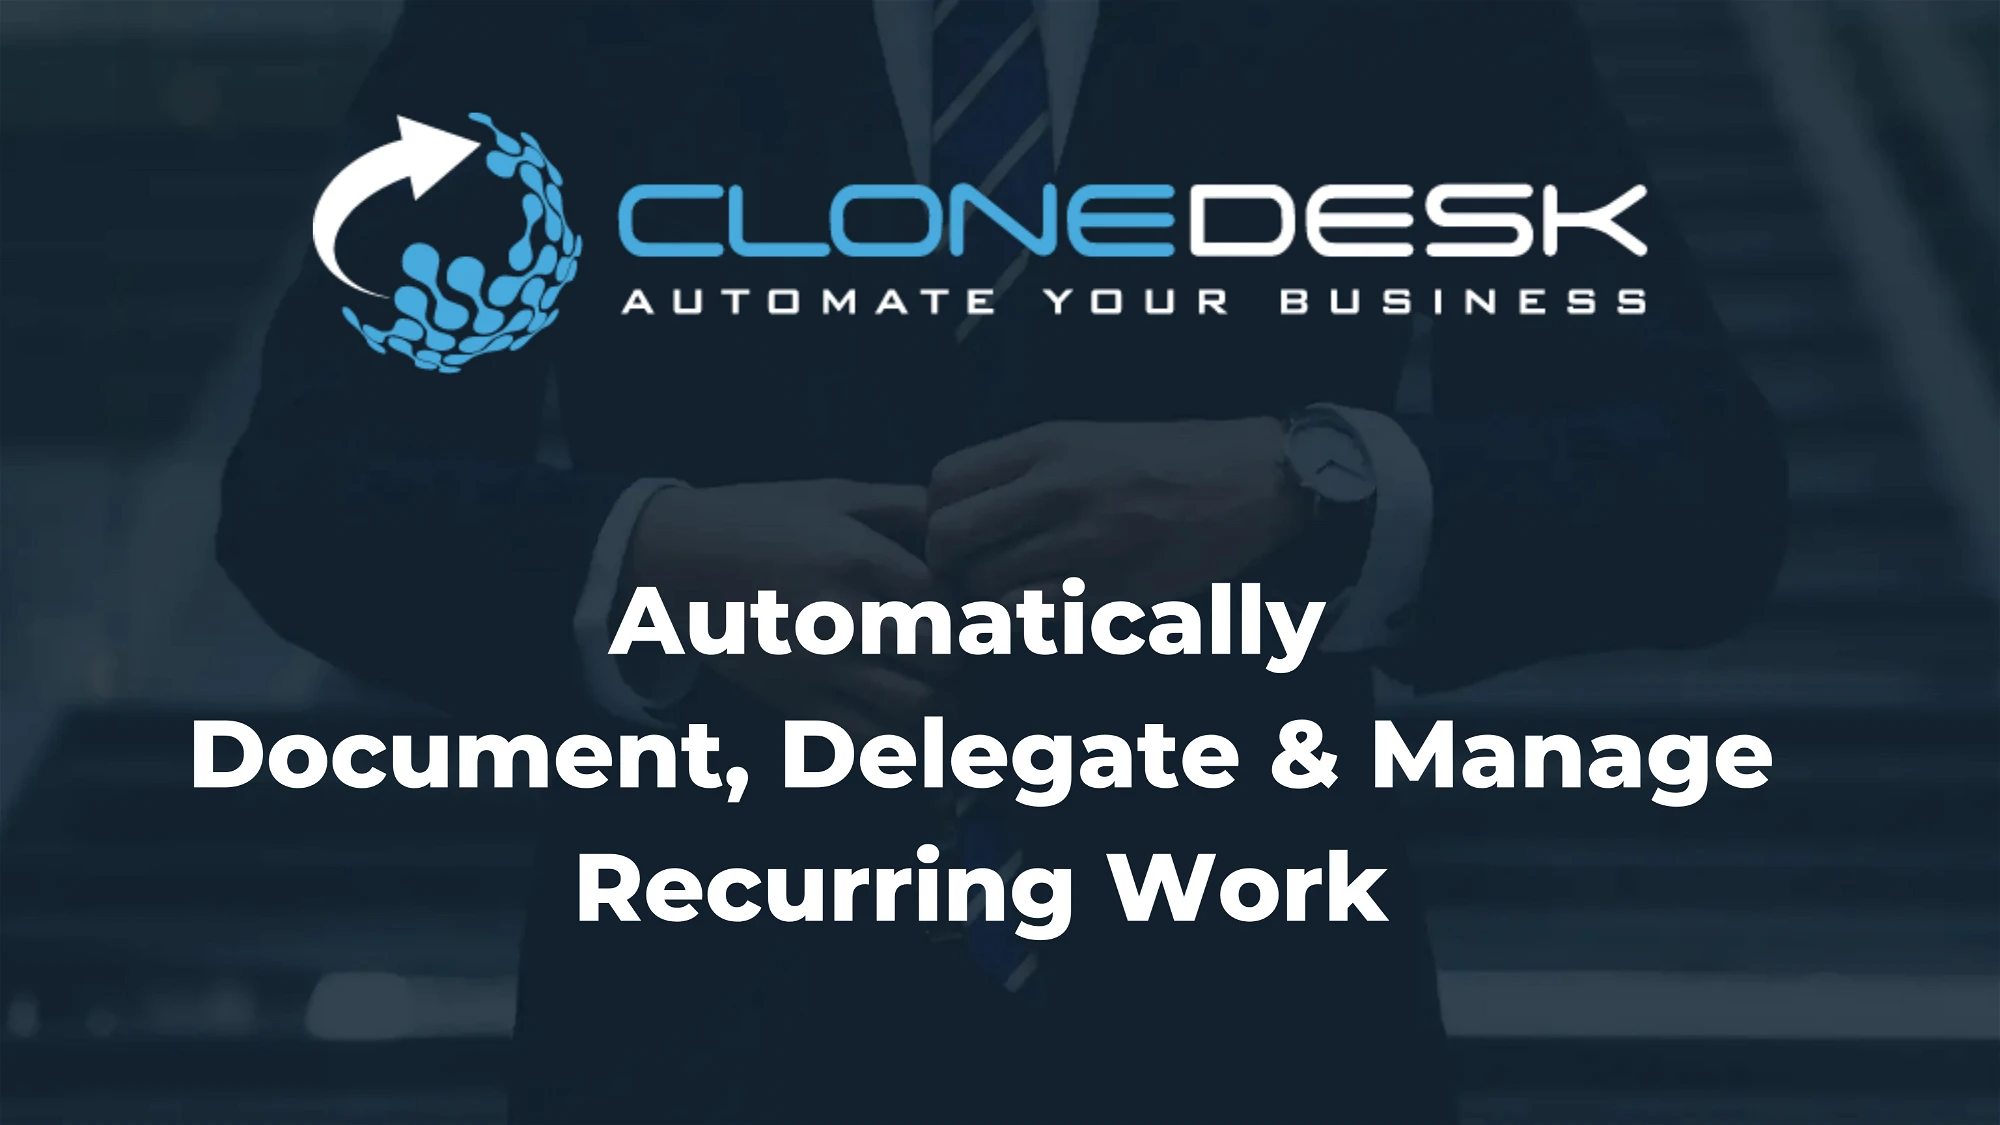 clonedesk lifetime deal